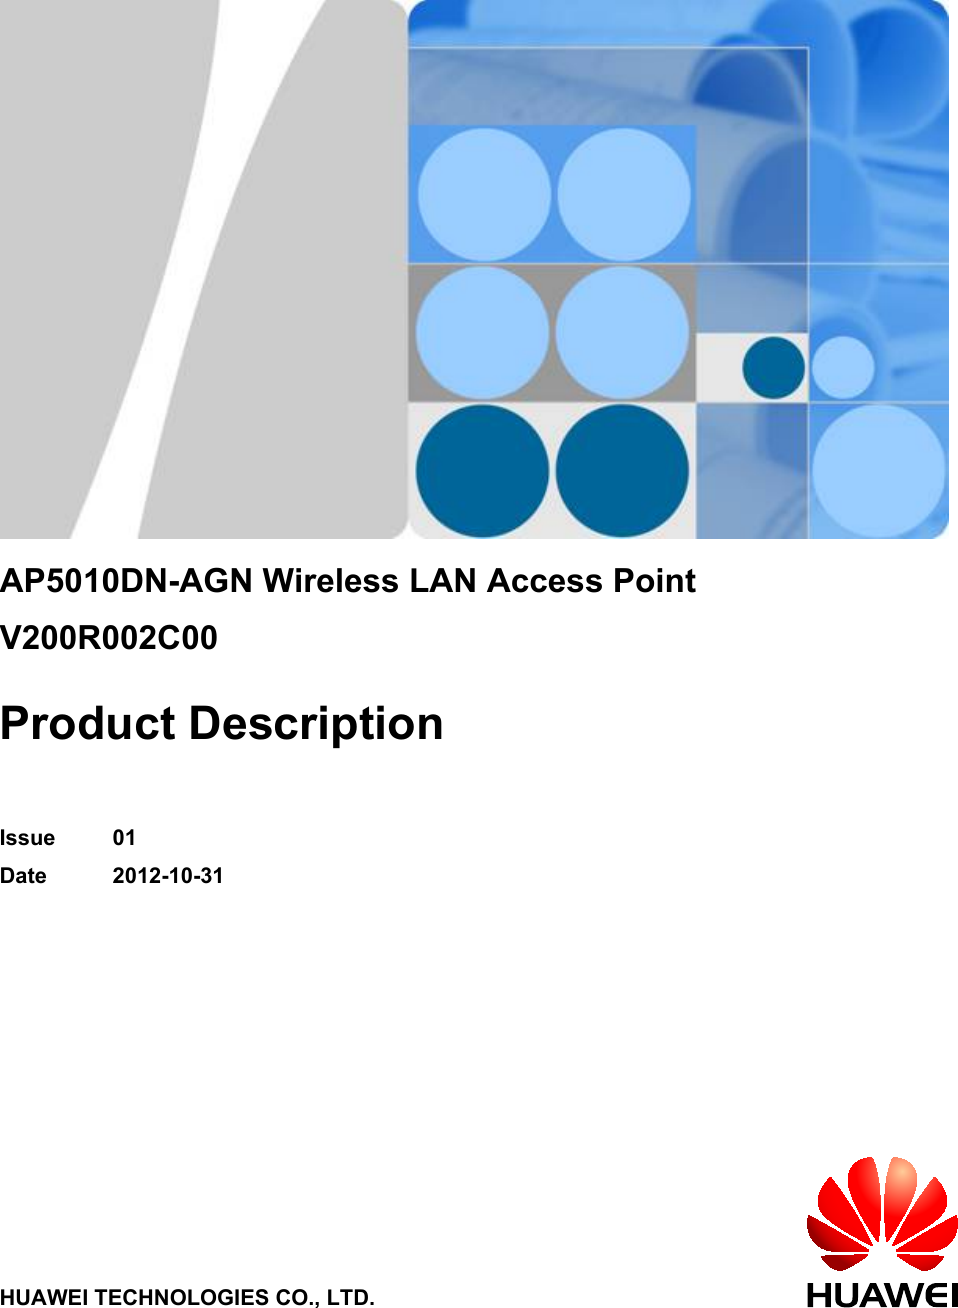 AP5010DN-AGN Wireless LAN Access PointV200R002C00Product DescriptionIssue 01Date 2012-10-31HUAWEI TECHNOLOGIES CO., LTD.